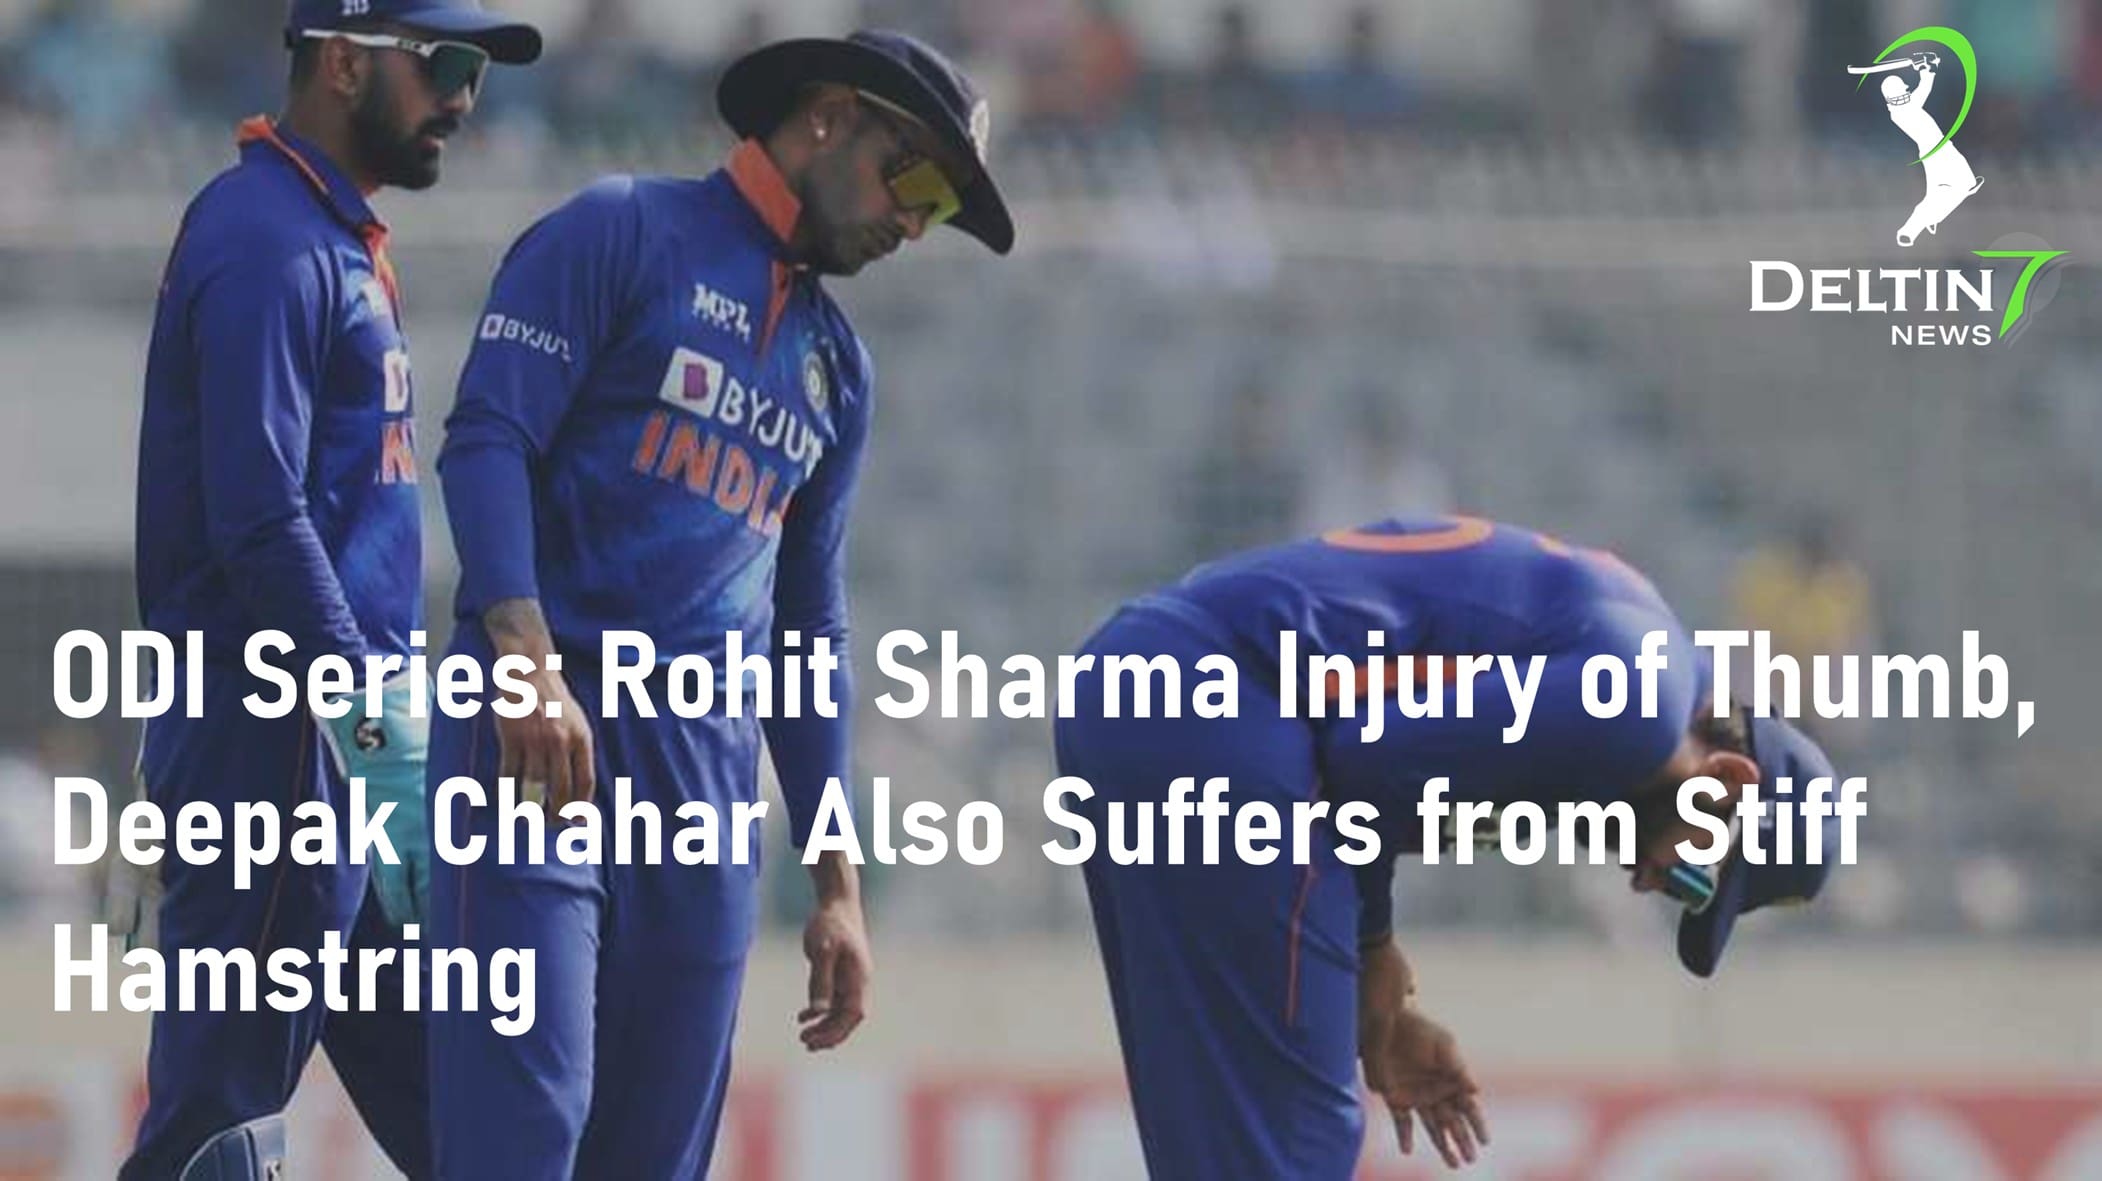 ODI series Rohit Sharma injury Deepak Chahar